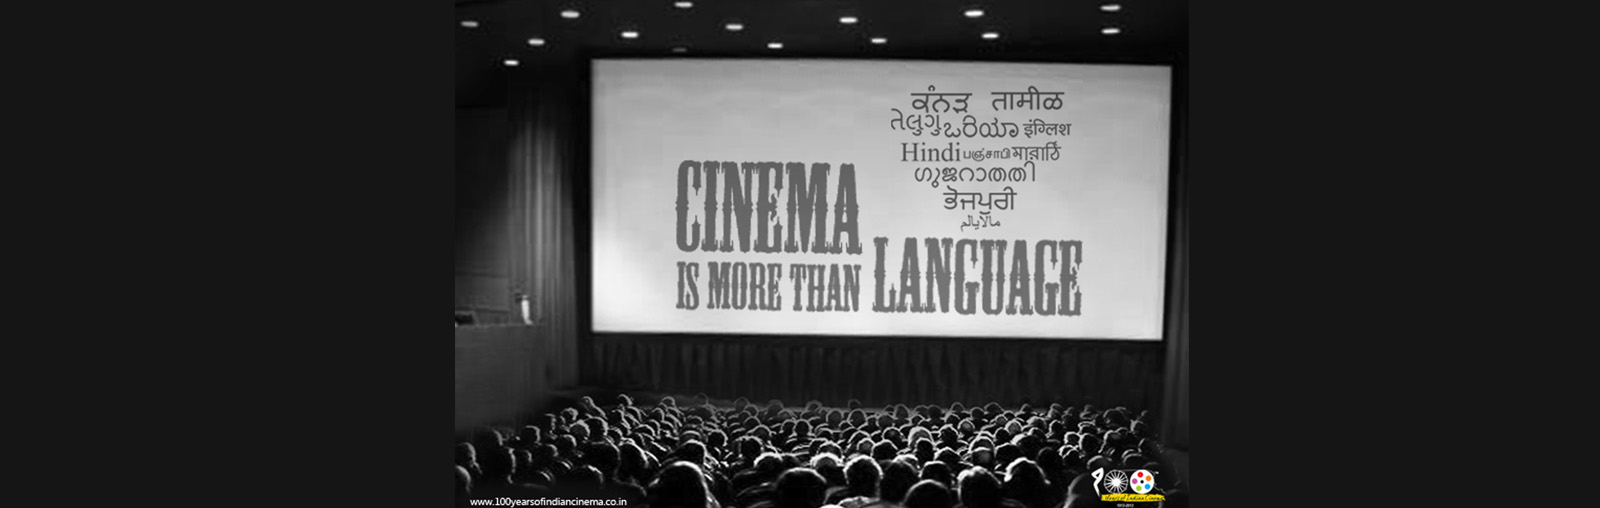 Cinema is more than Language by Manoj Mauryaa